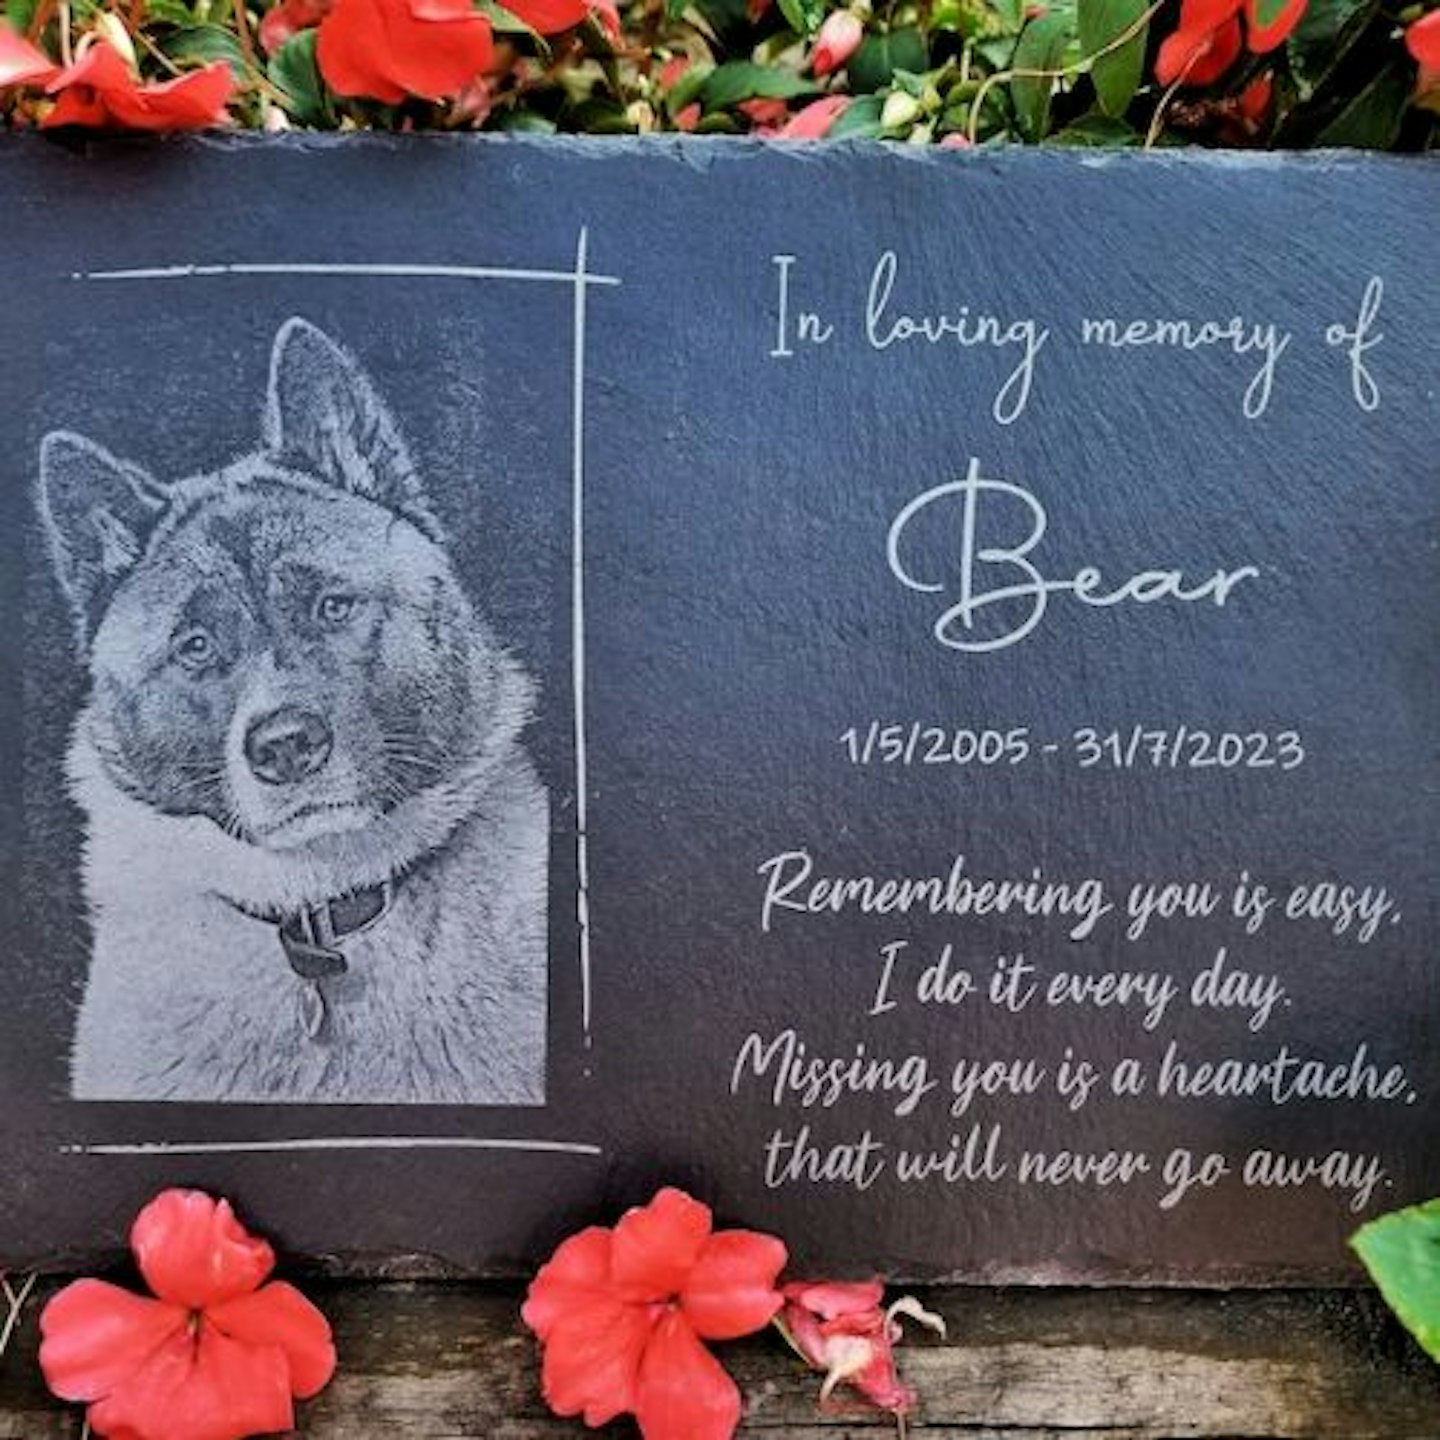 QbearUK Photo and Message Pet Memorial Slate/Plaque